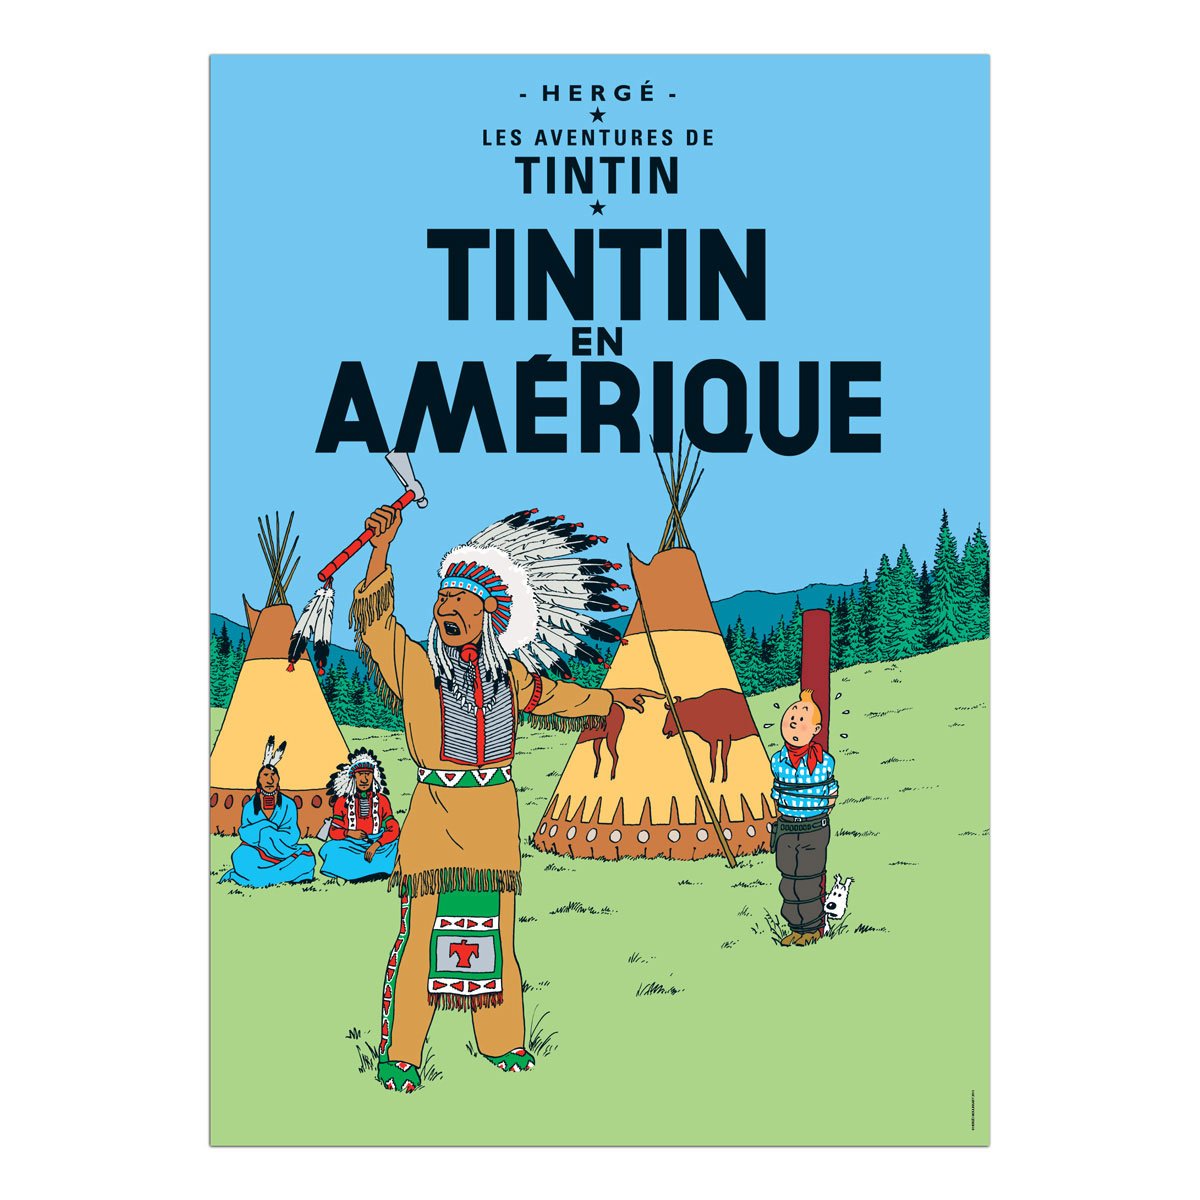 Tintin book postcards America